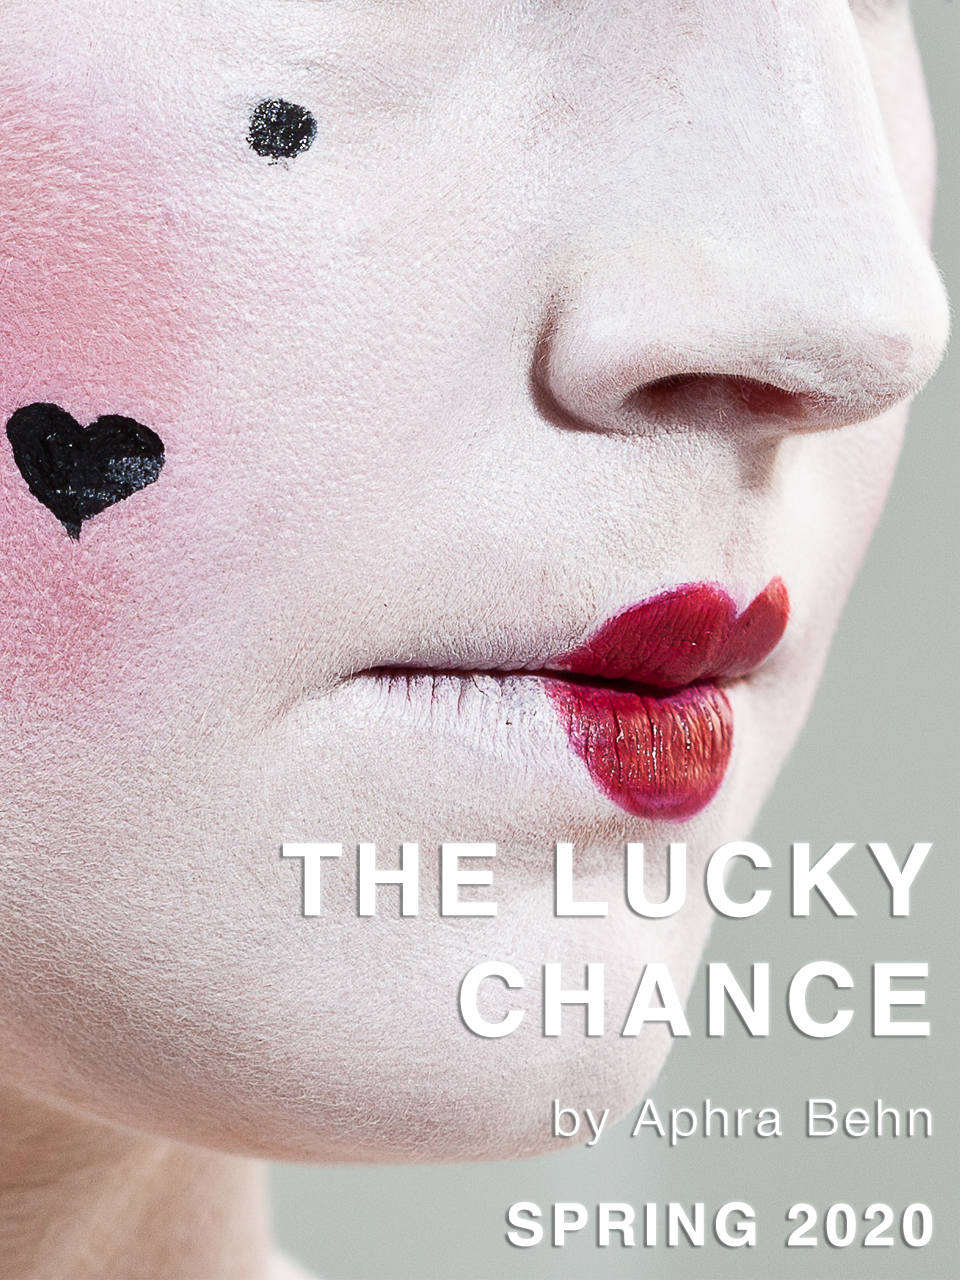 The Lucky Chance Aphra Behn